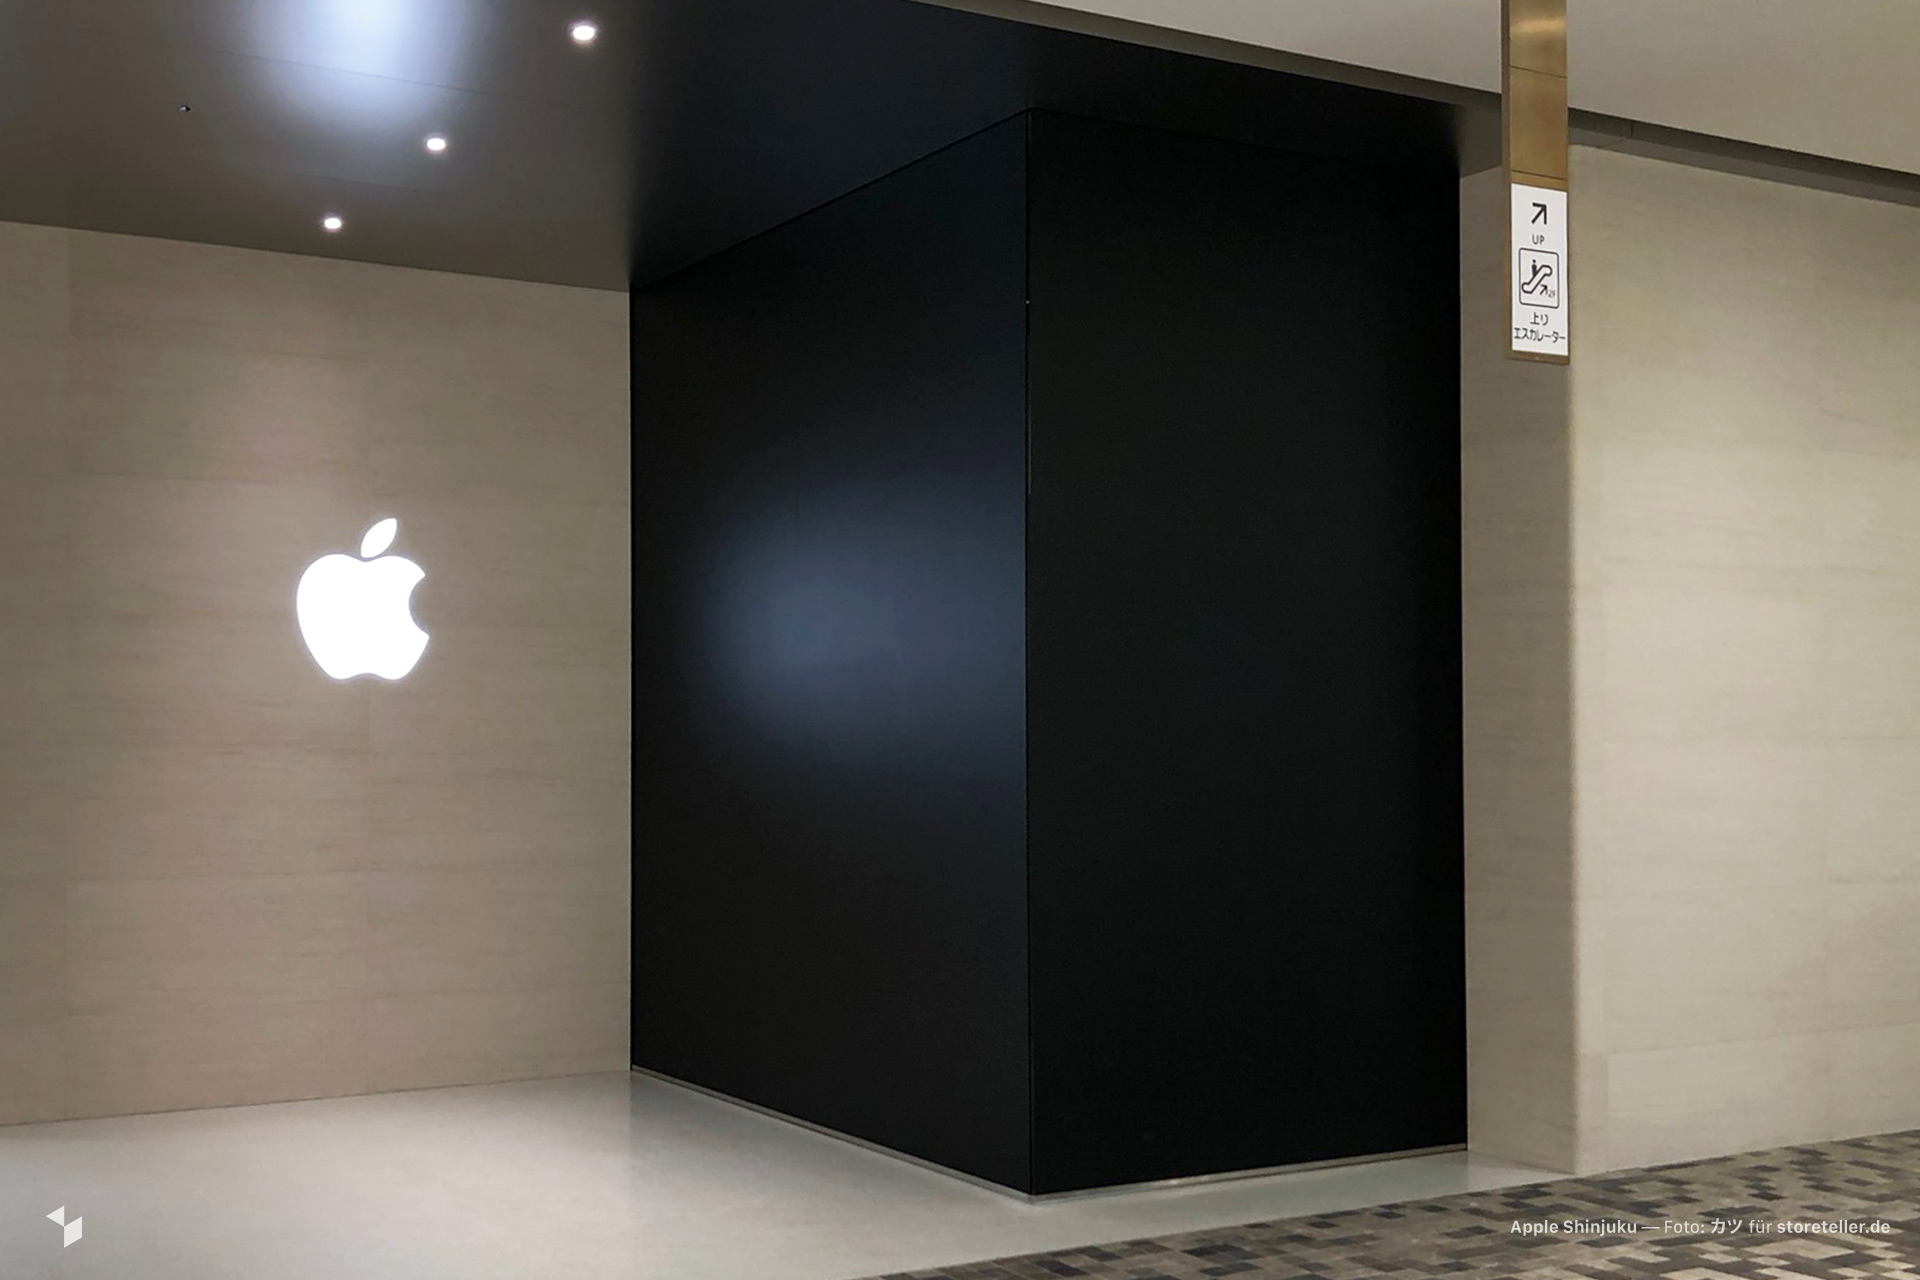 Neonreklame: Das Ankündigungsmotiv von Apple Shinjuku in Tokio (Japan)